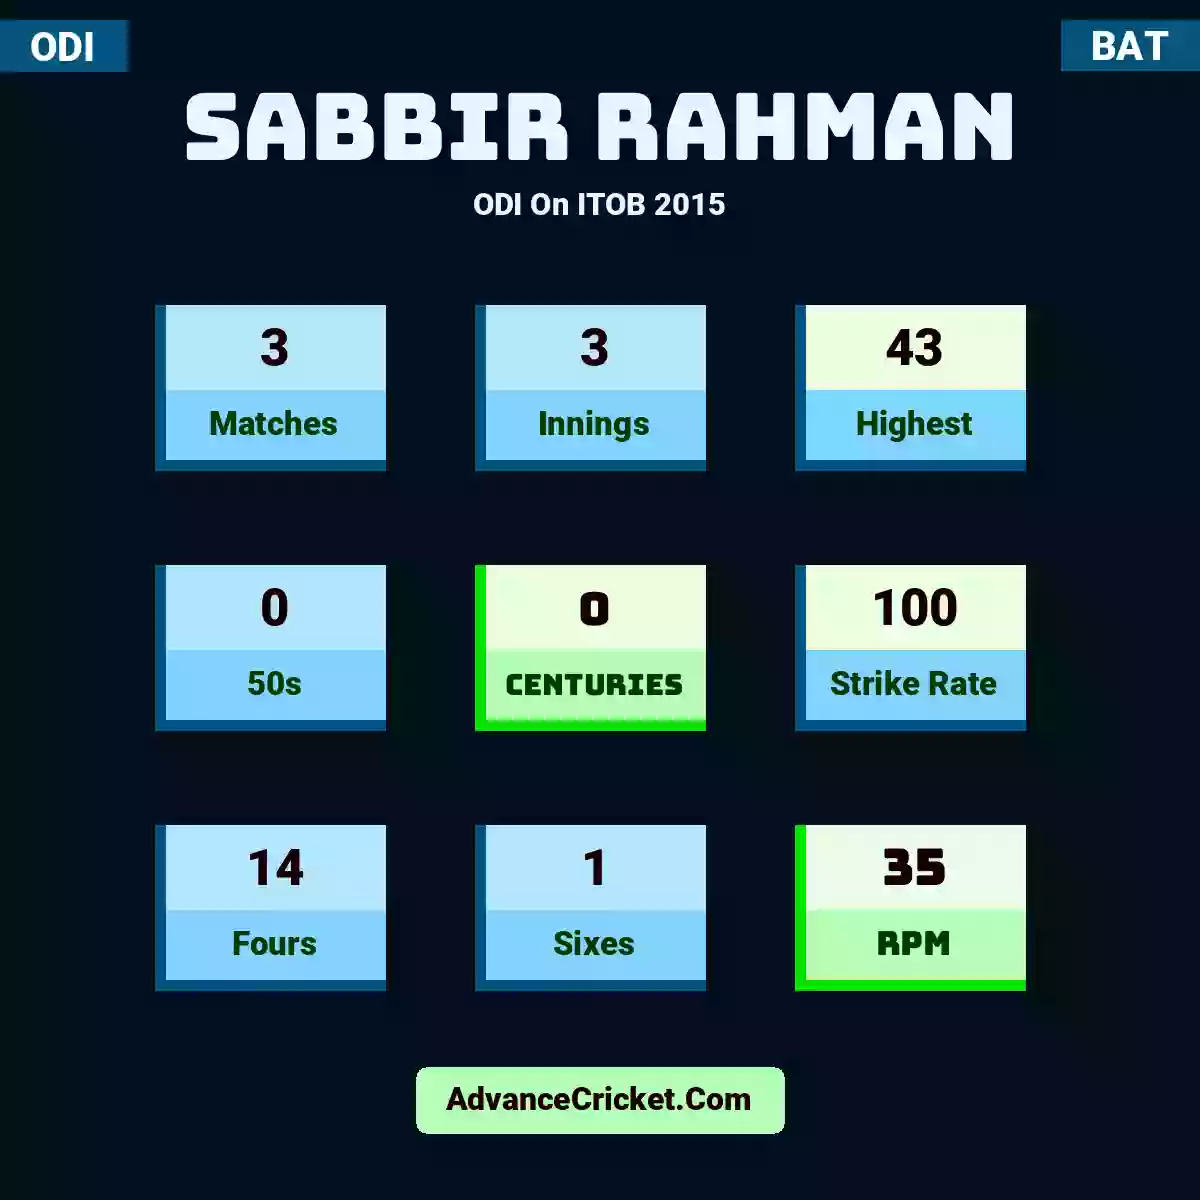 Sabbir Rahman ODI  On ITOB 2015, Sabbir Rahman played 3 matches, scored 43 runs as highest, 0 half-centuries, and 0 centuries, with a strike rate of 100. S.Rahman hit 14 fours and 1 sixes, with an RPM of 35.